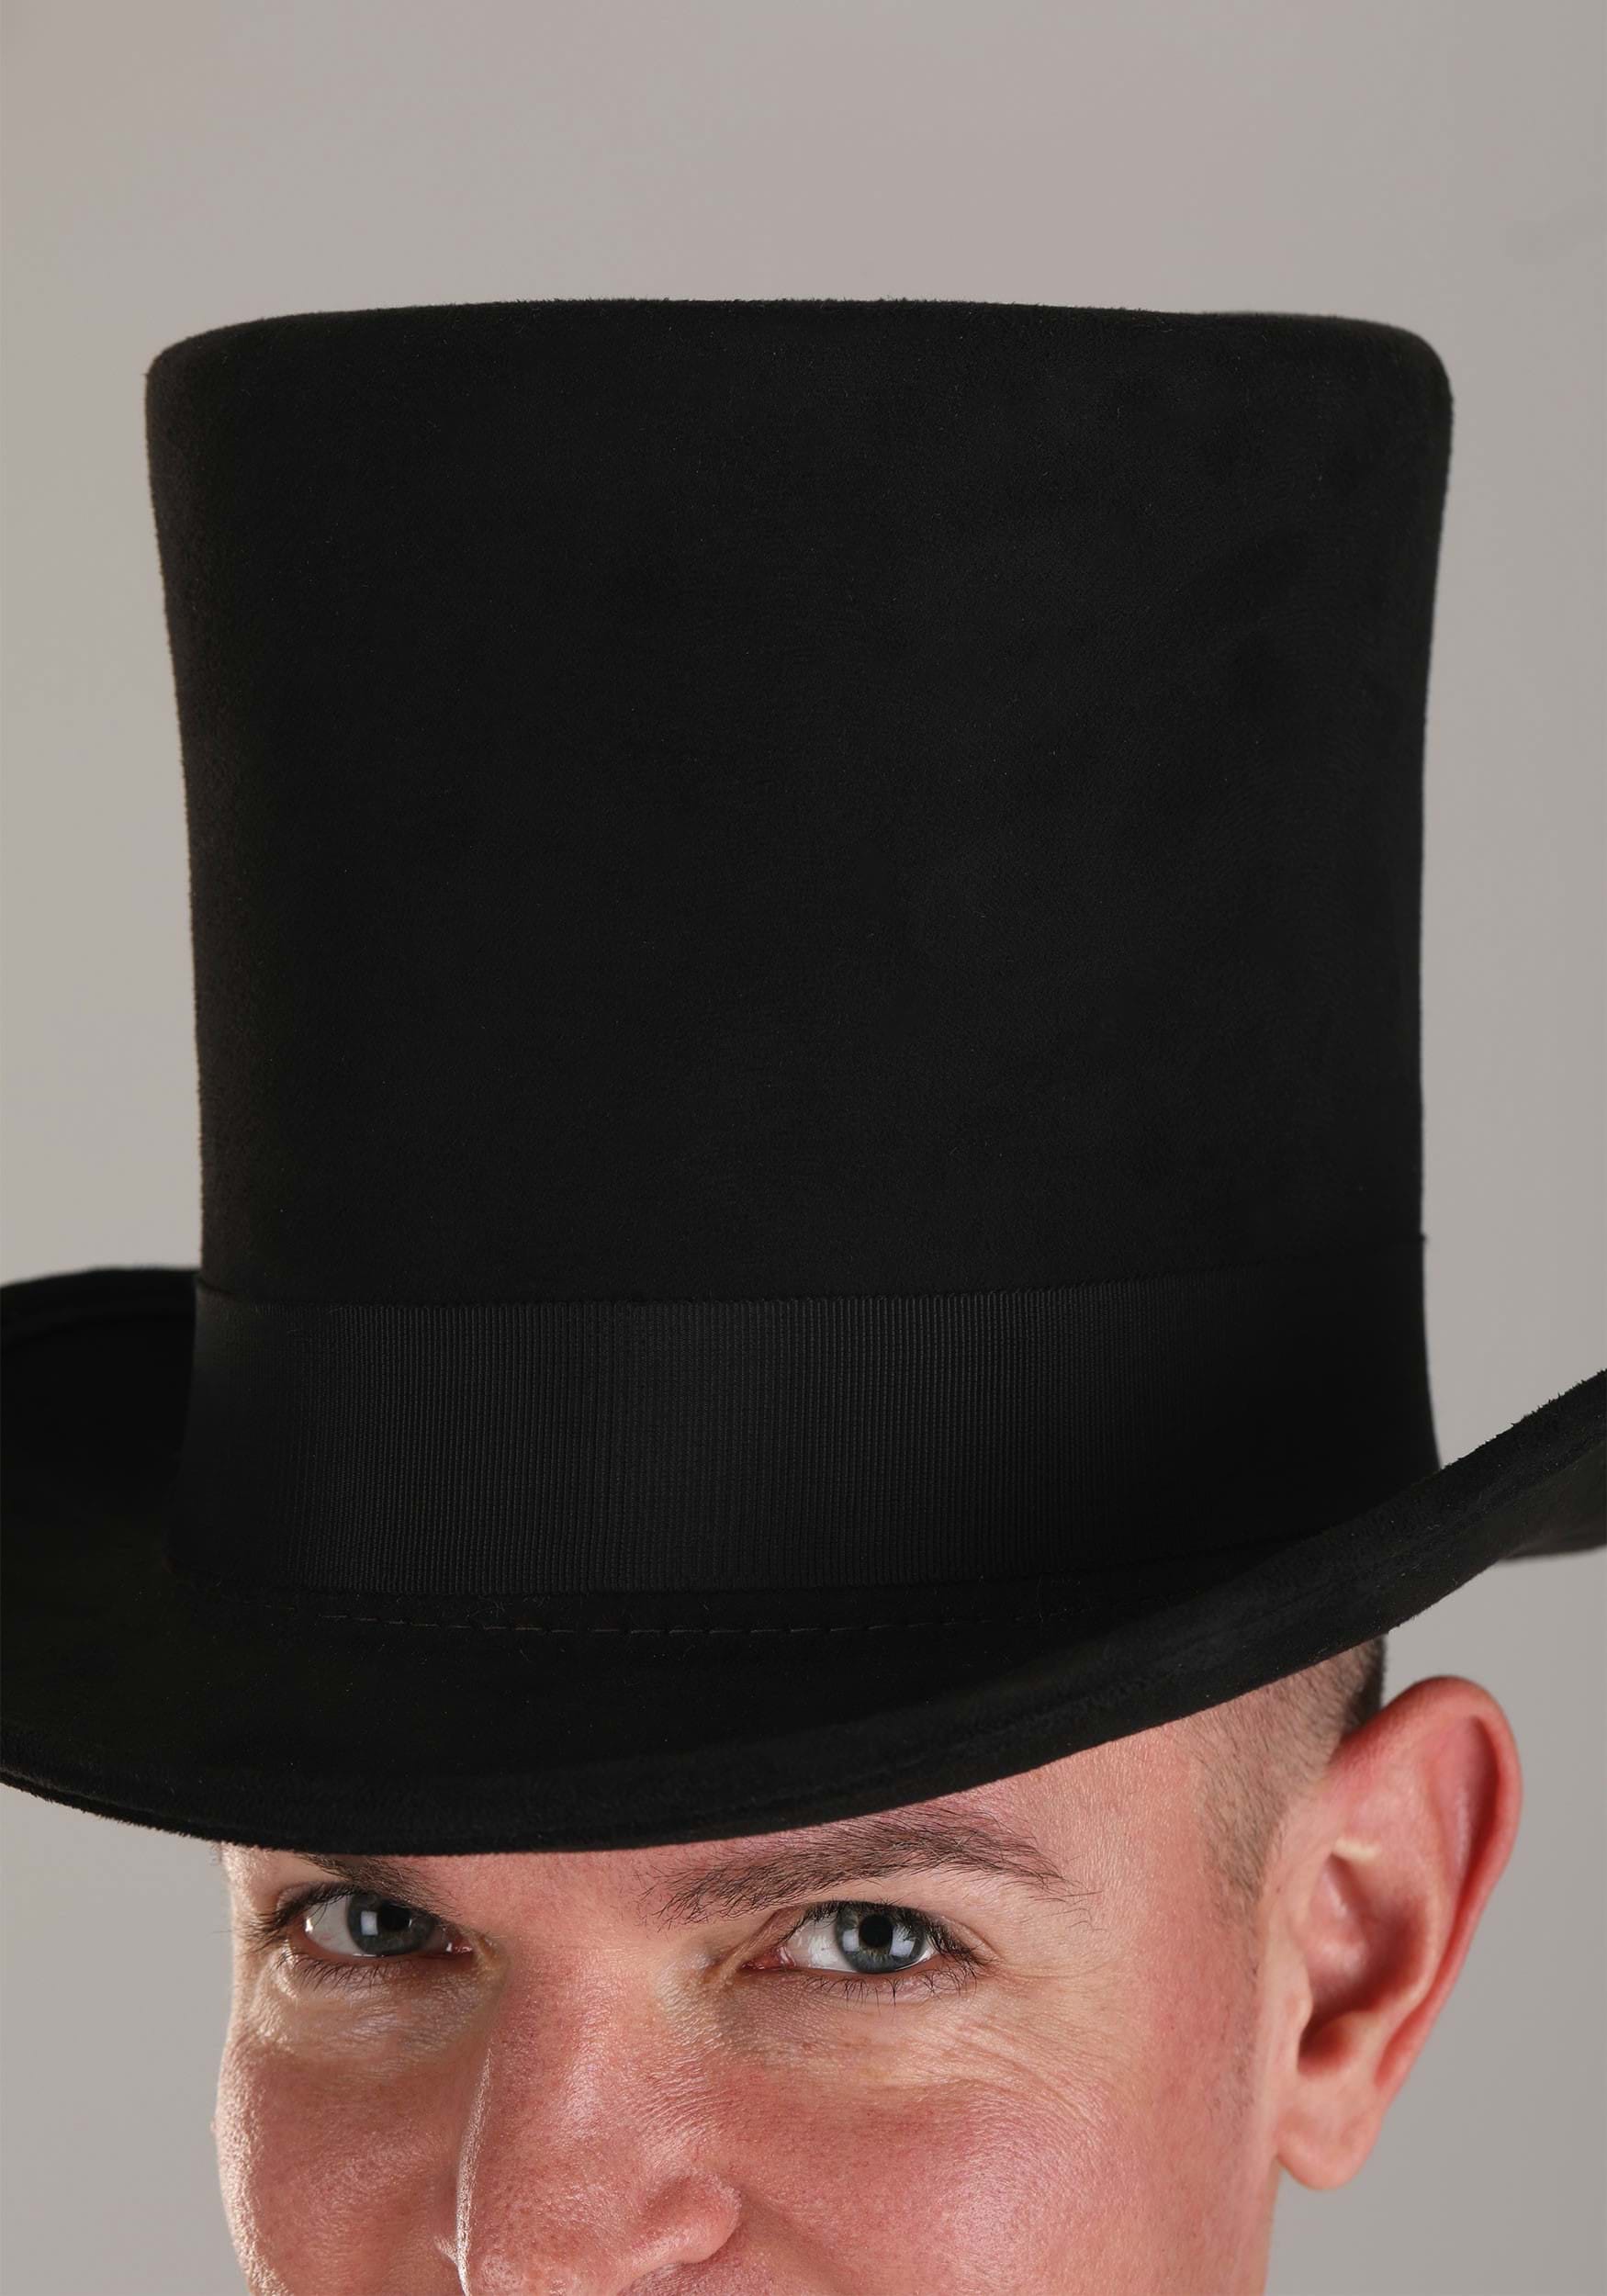 Adult Costume Black Top Hat